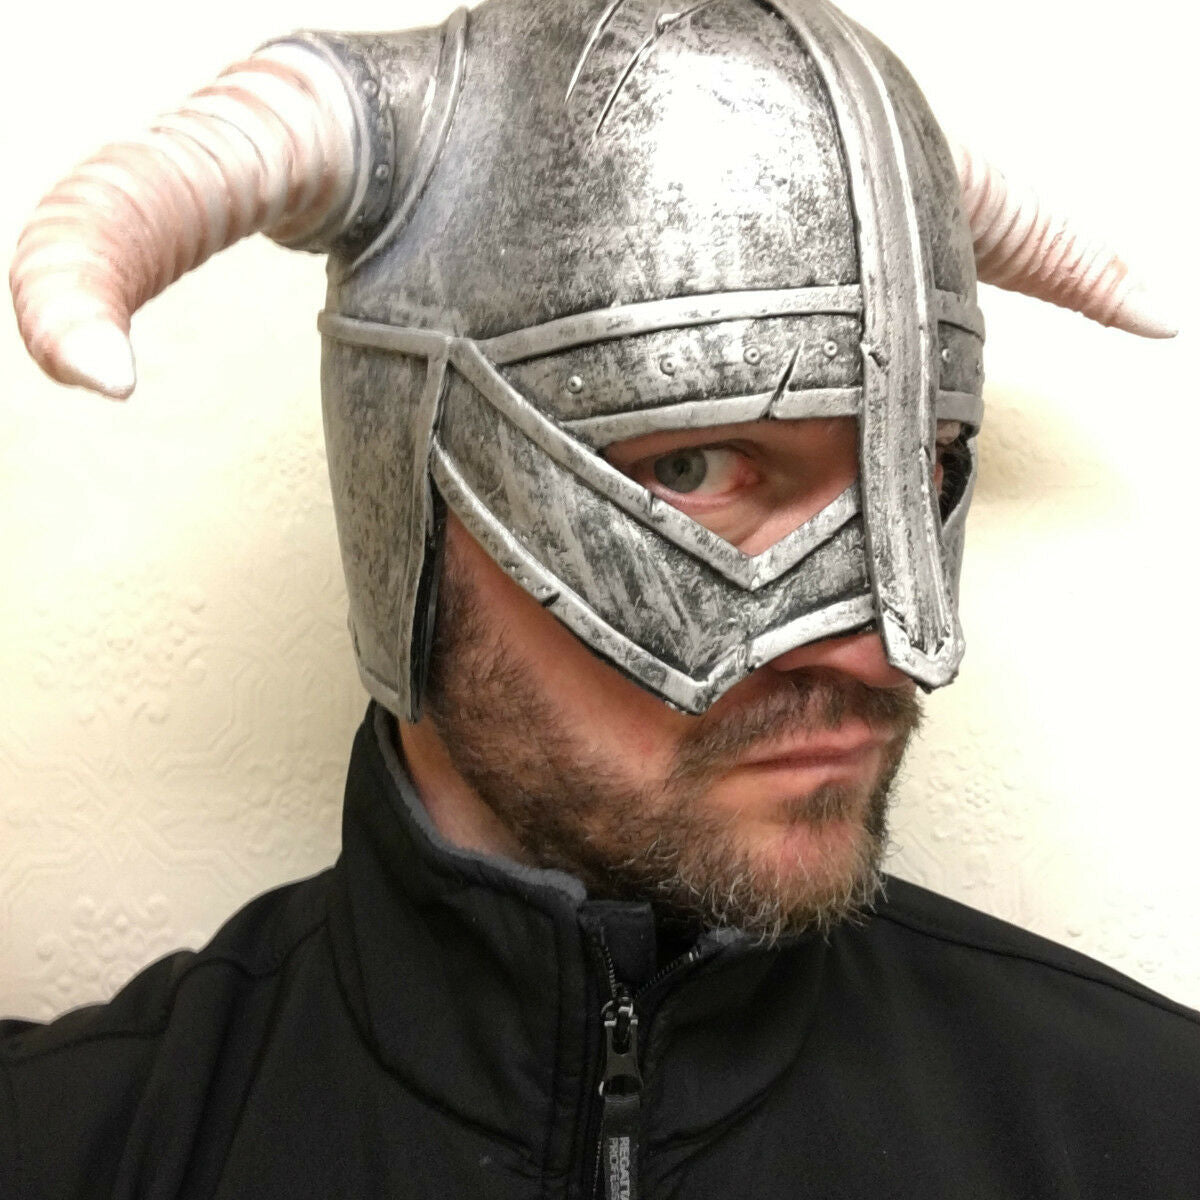 Masque de casque viking.